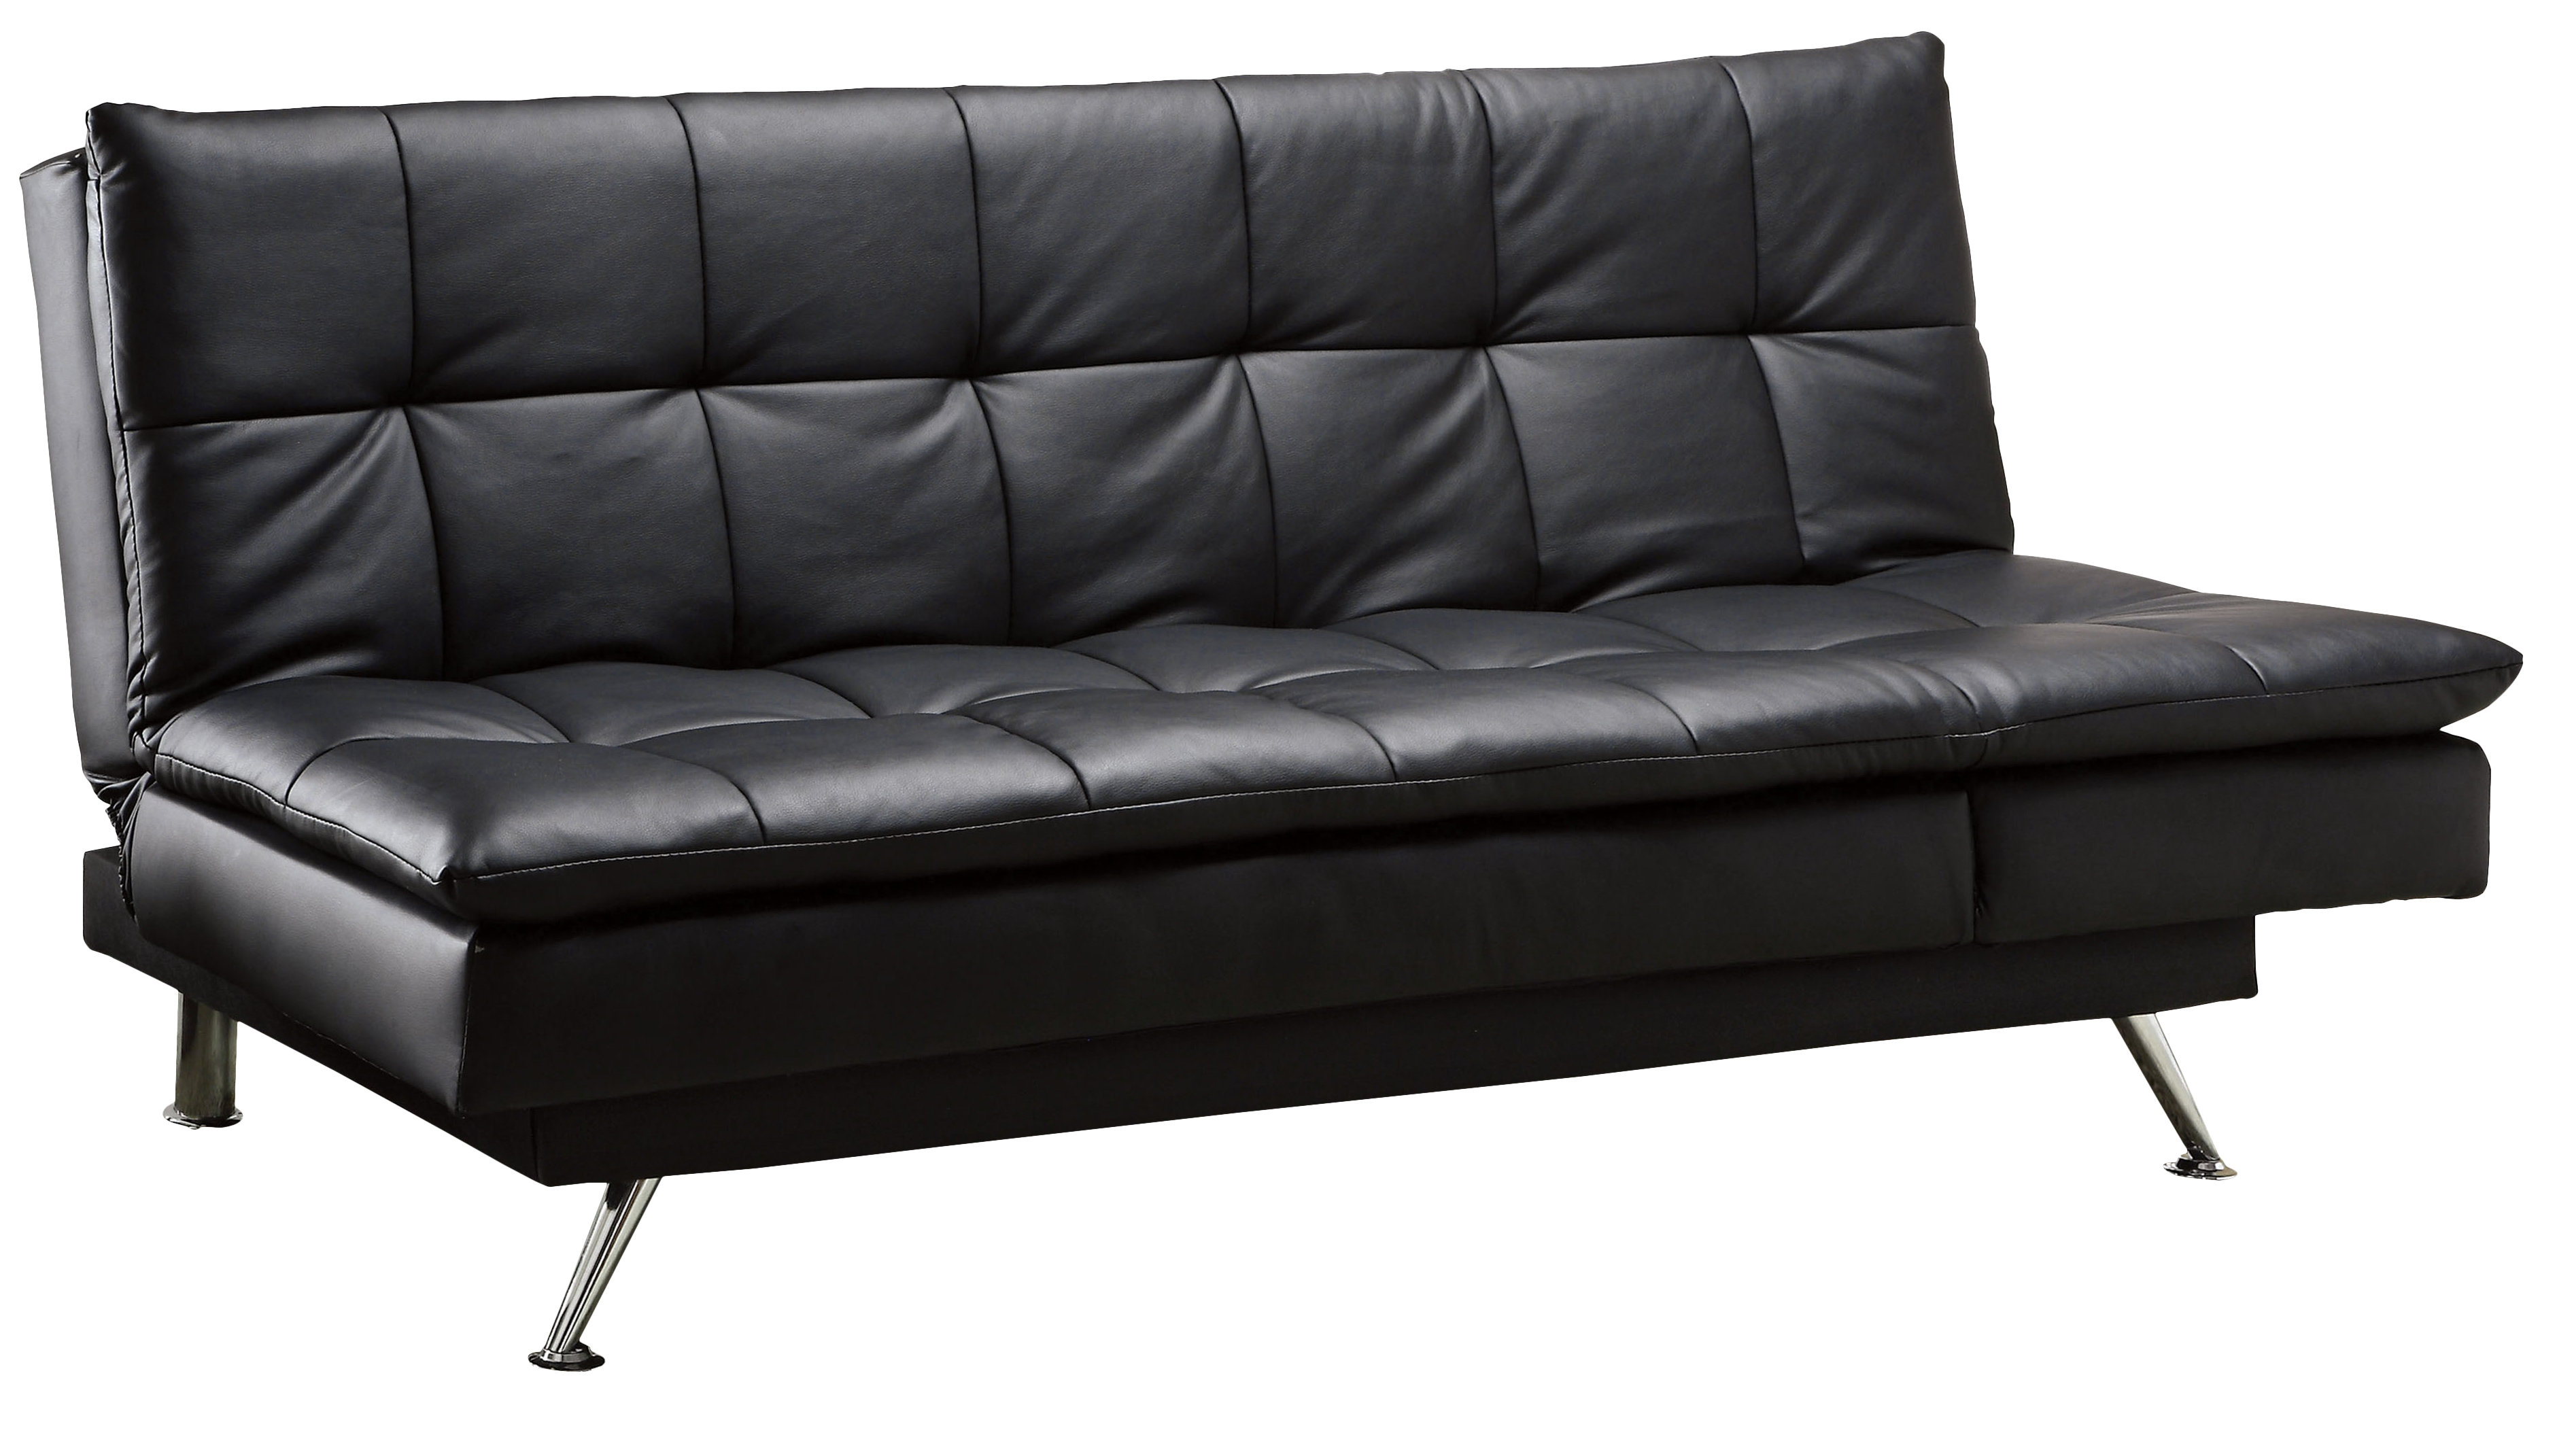 arrighetto sofa bed sleeper reviews